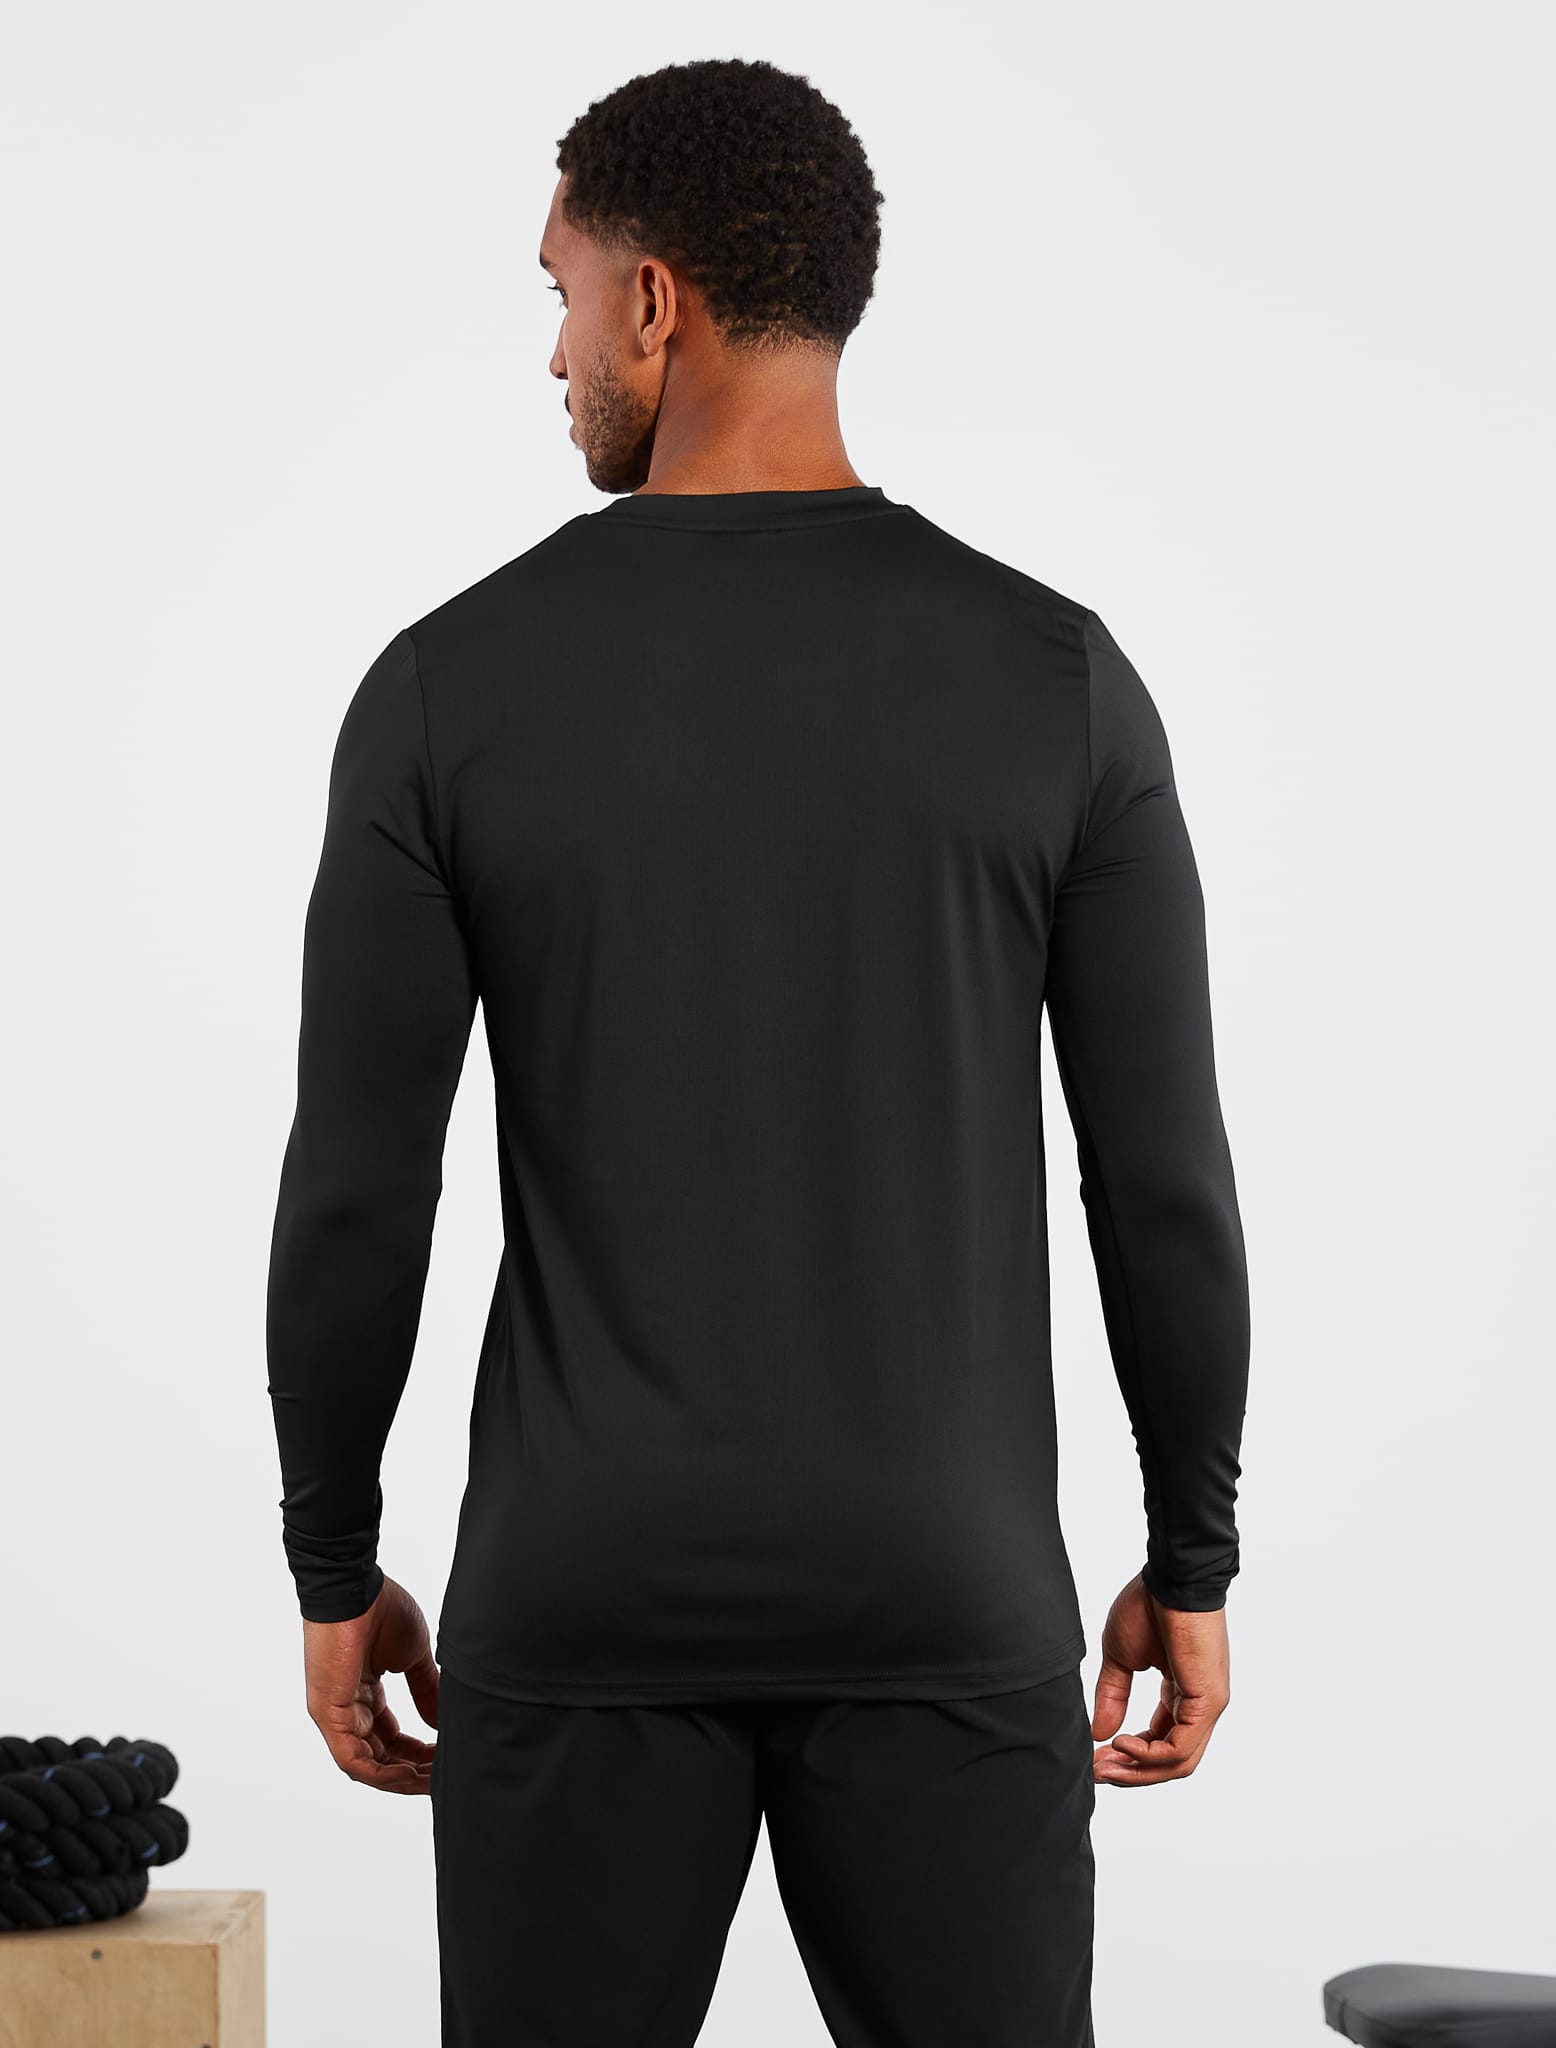 Training Long Sleeve T-Shirt / Black Pursue Fitness 2